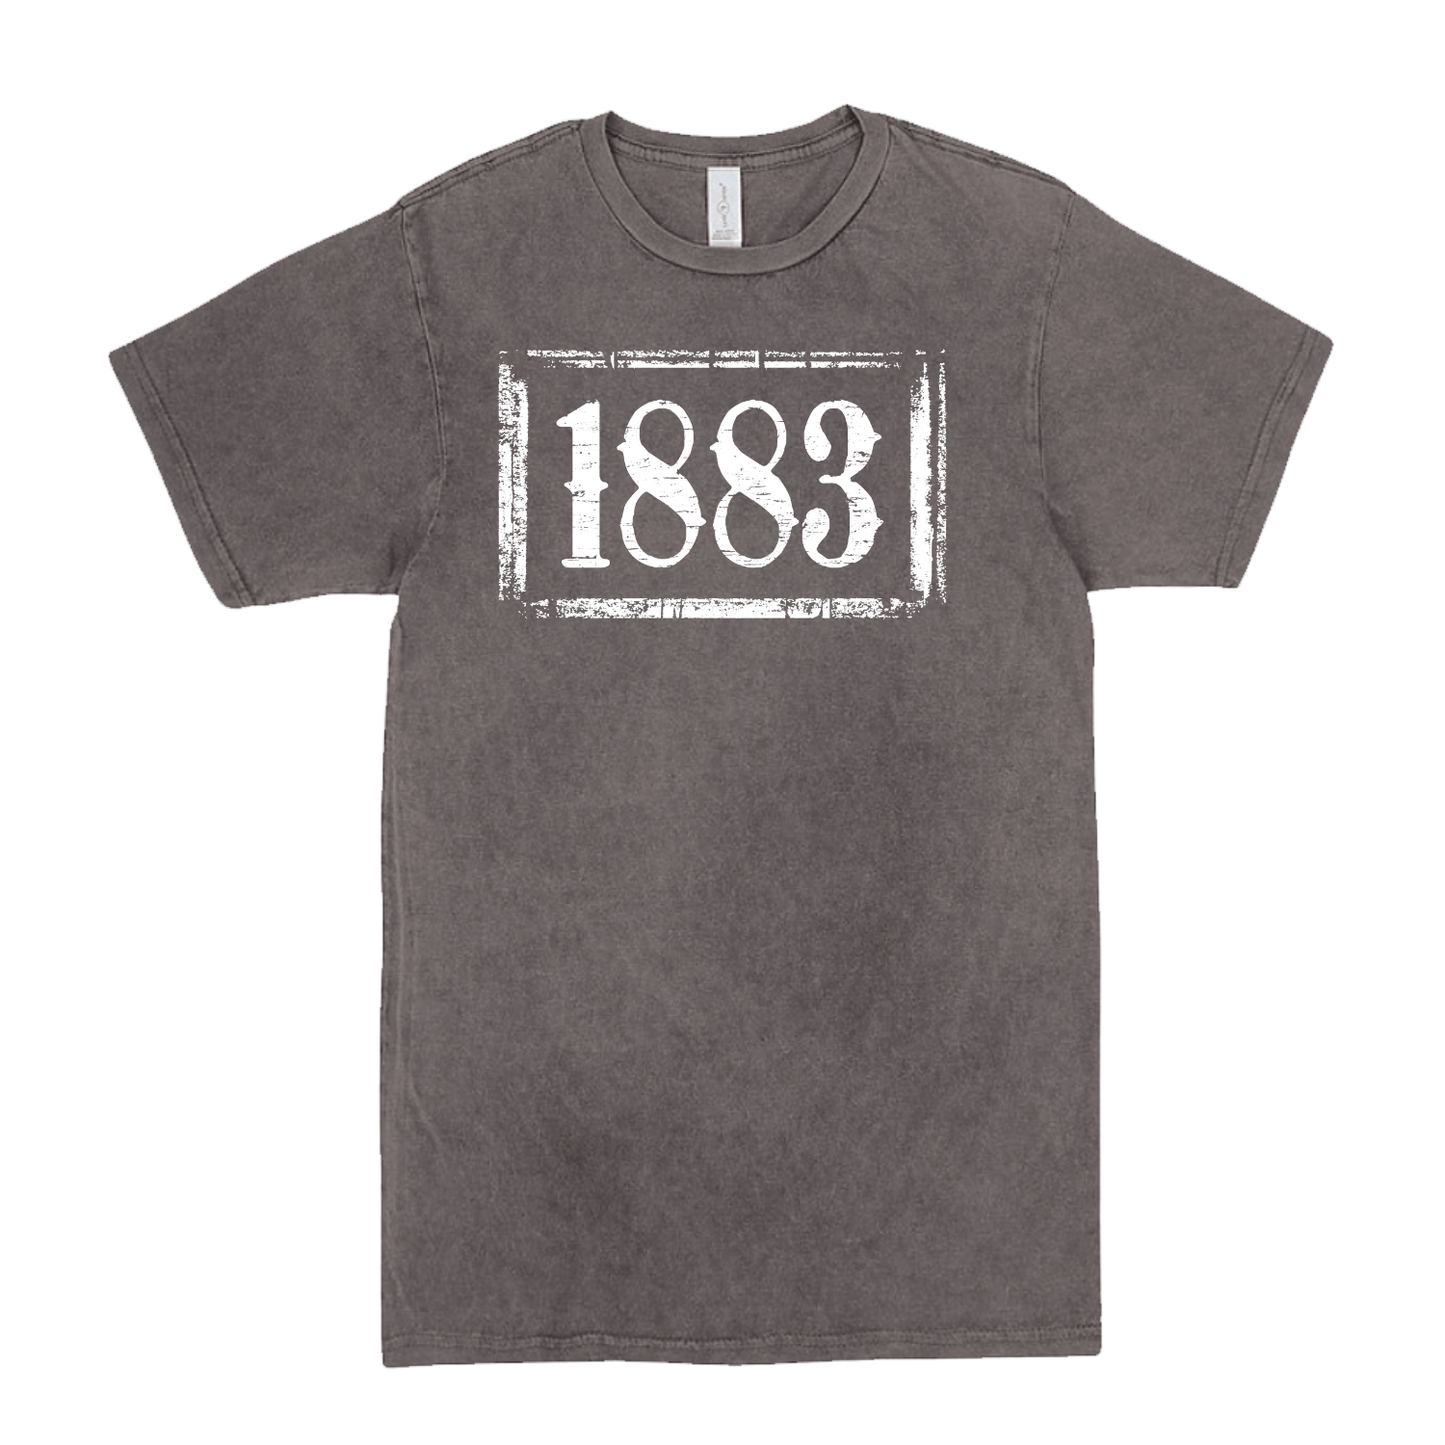 Yellowstone 1883 Logo Distressed Short Sleeve T - Shirt - Paramount Shop